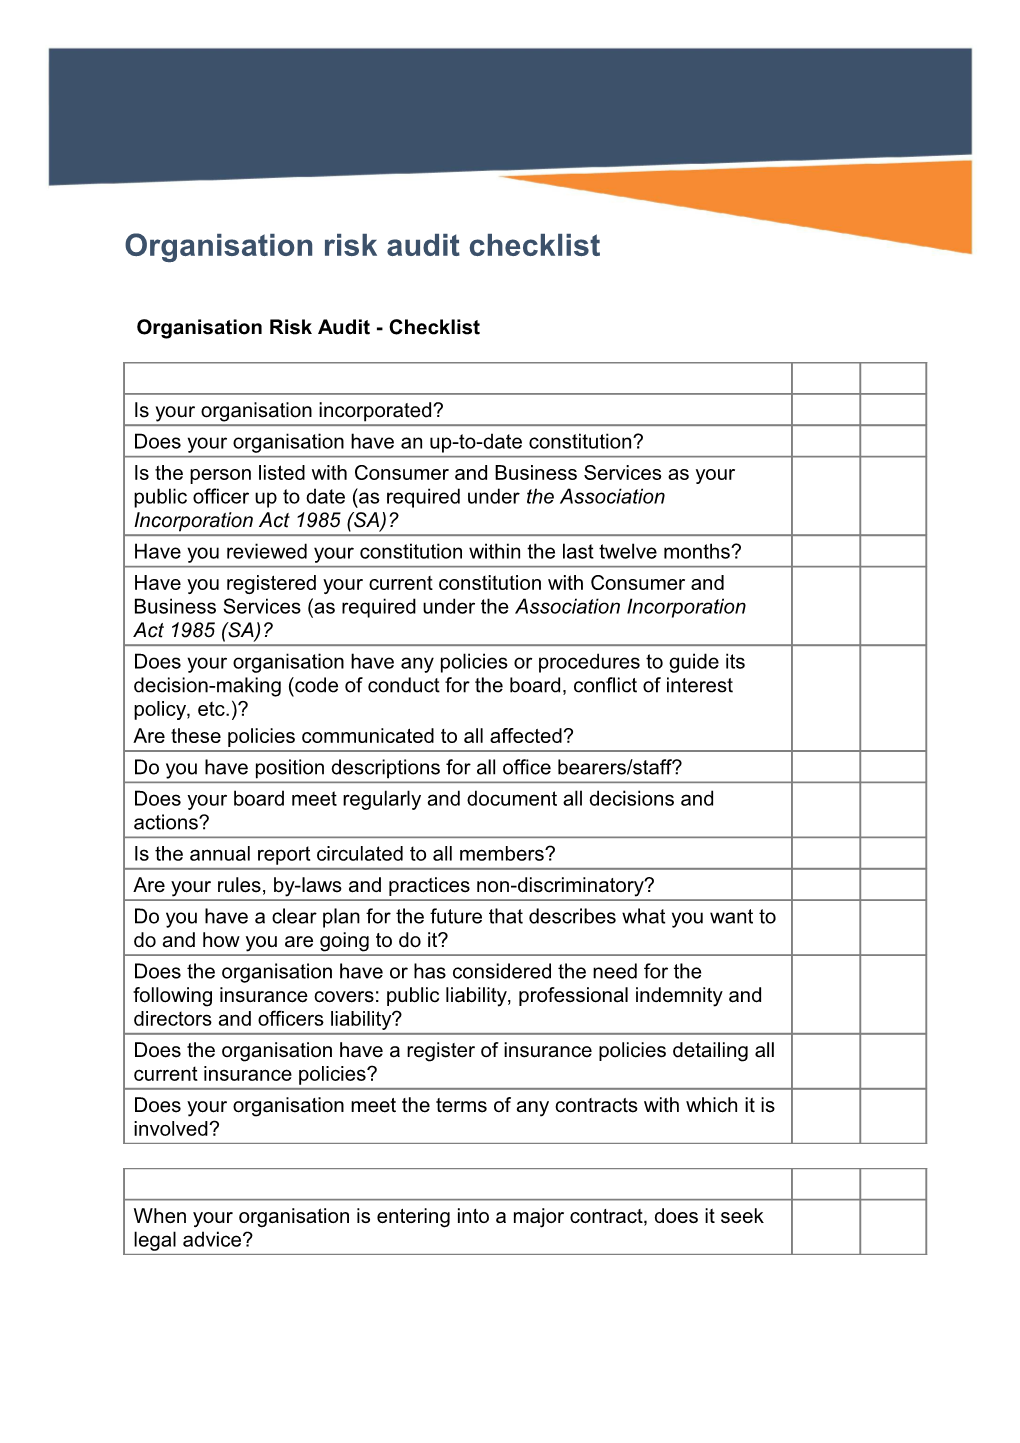 Organisation Risk Audit Checklist